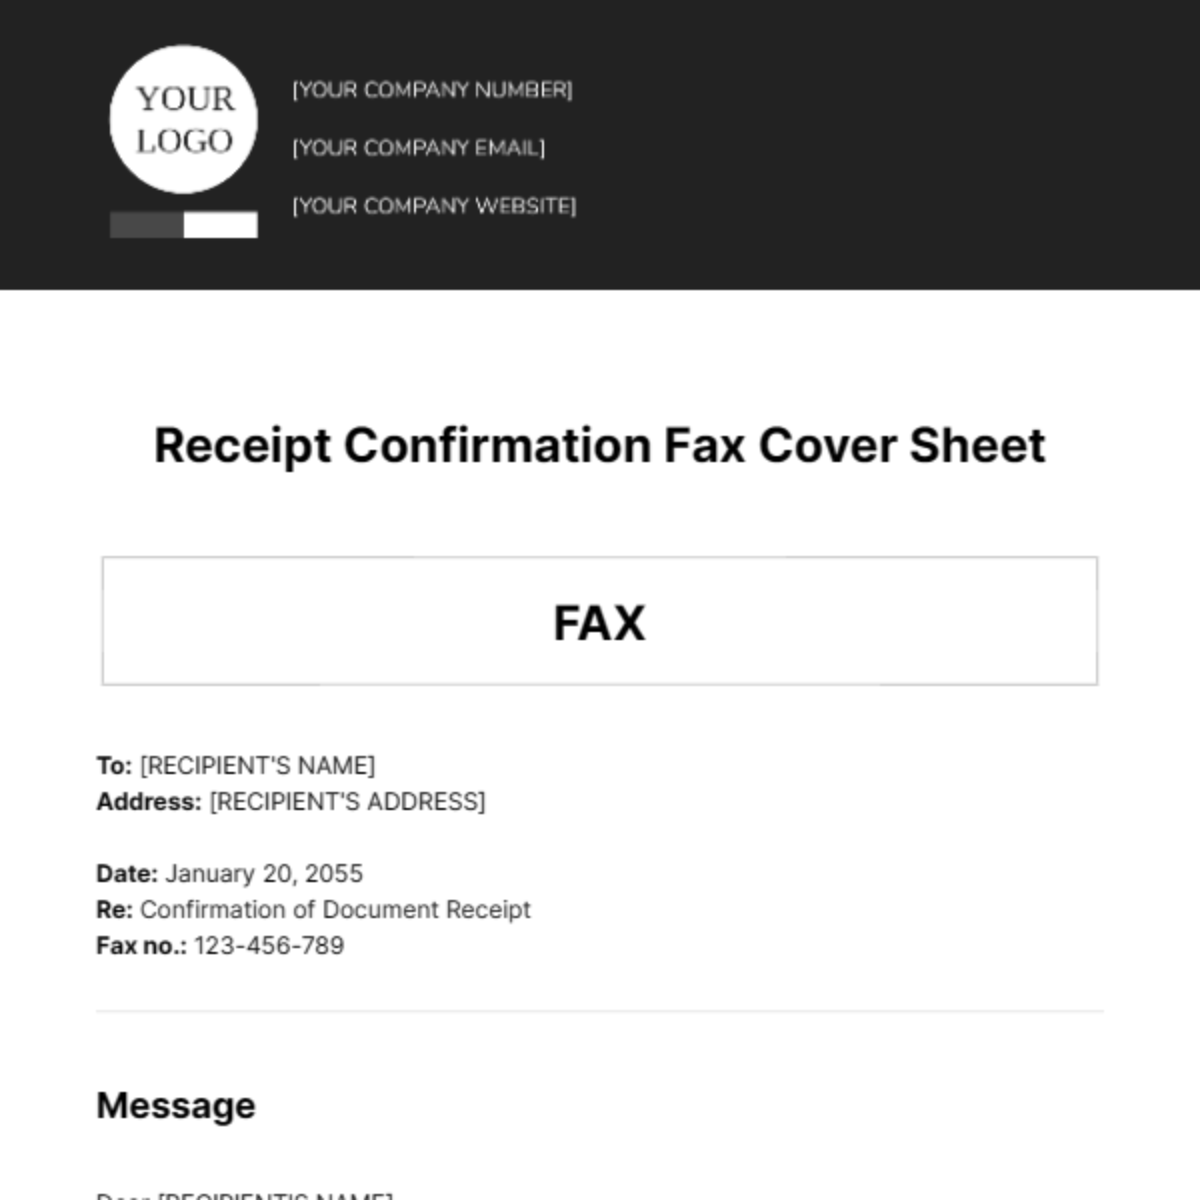 Receipt Confirmation Fax Cover Sheet Template